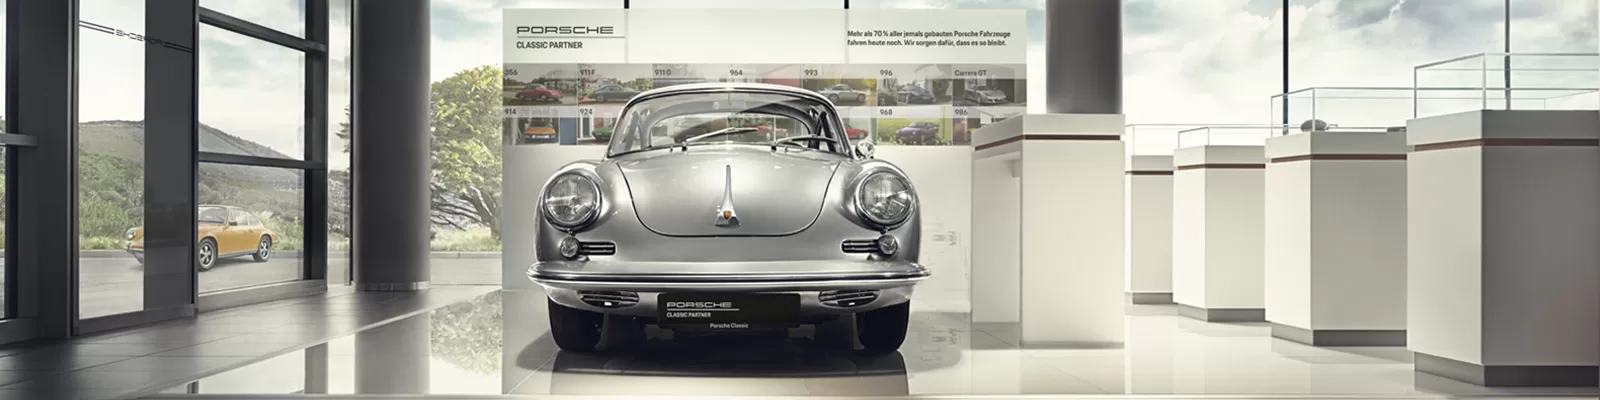 Стенд Porsche Classic